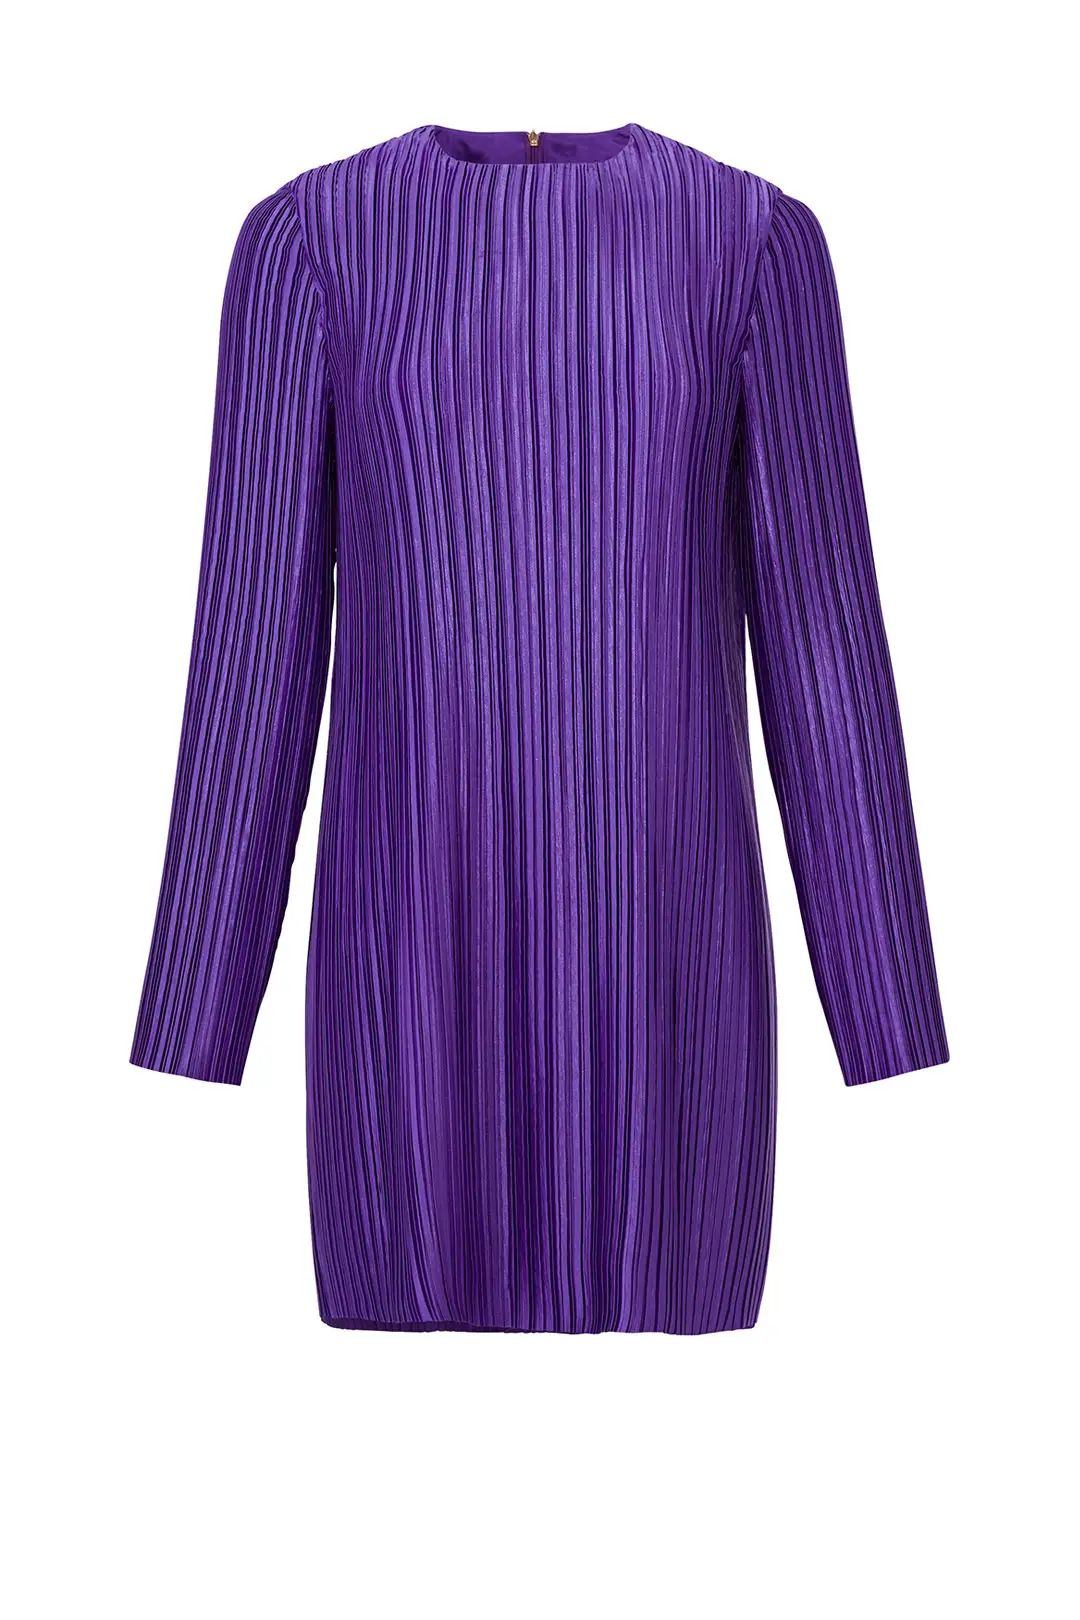 Tibi Violet Plisse Mini Dress | Rent The Runway